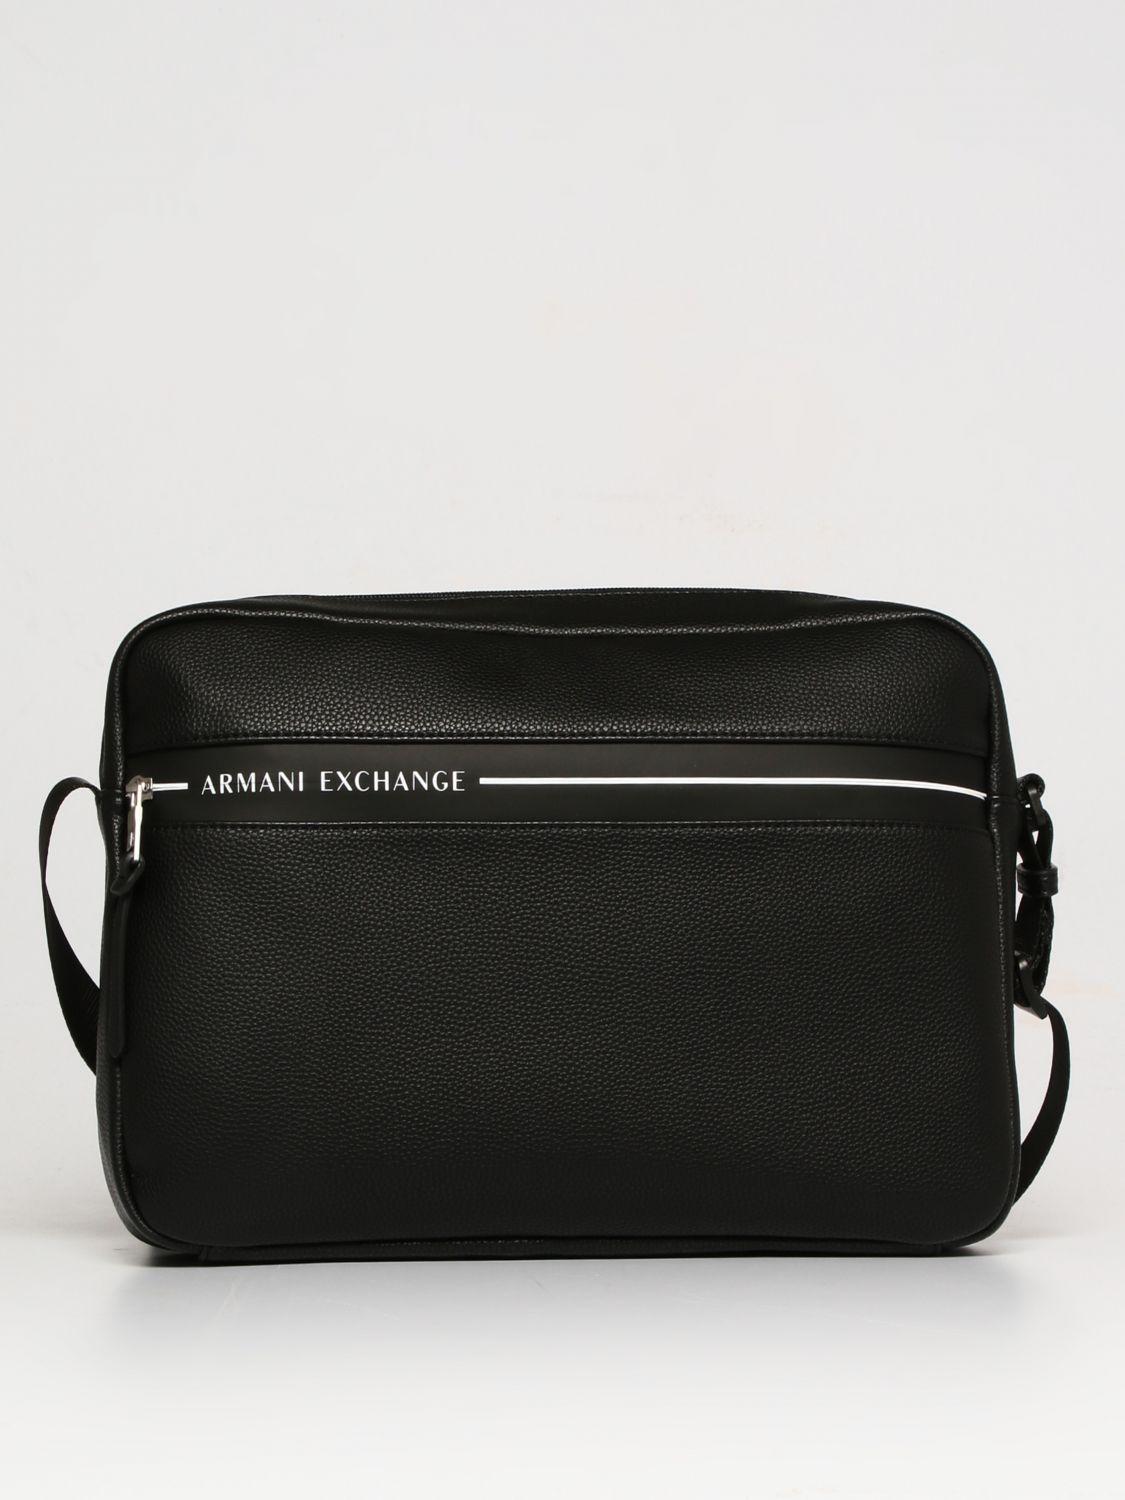 Armani Exchange | Bags | Armani Exchange Shoulder Bag Purse In Black |  Poshmark